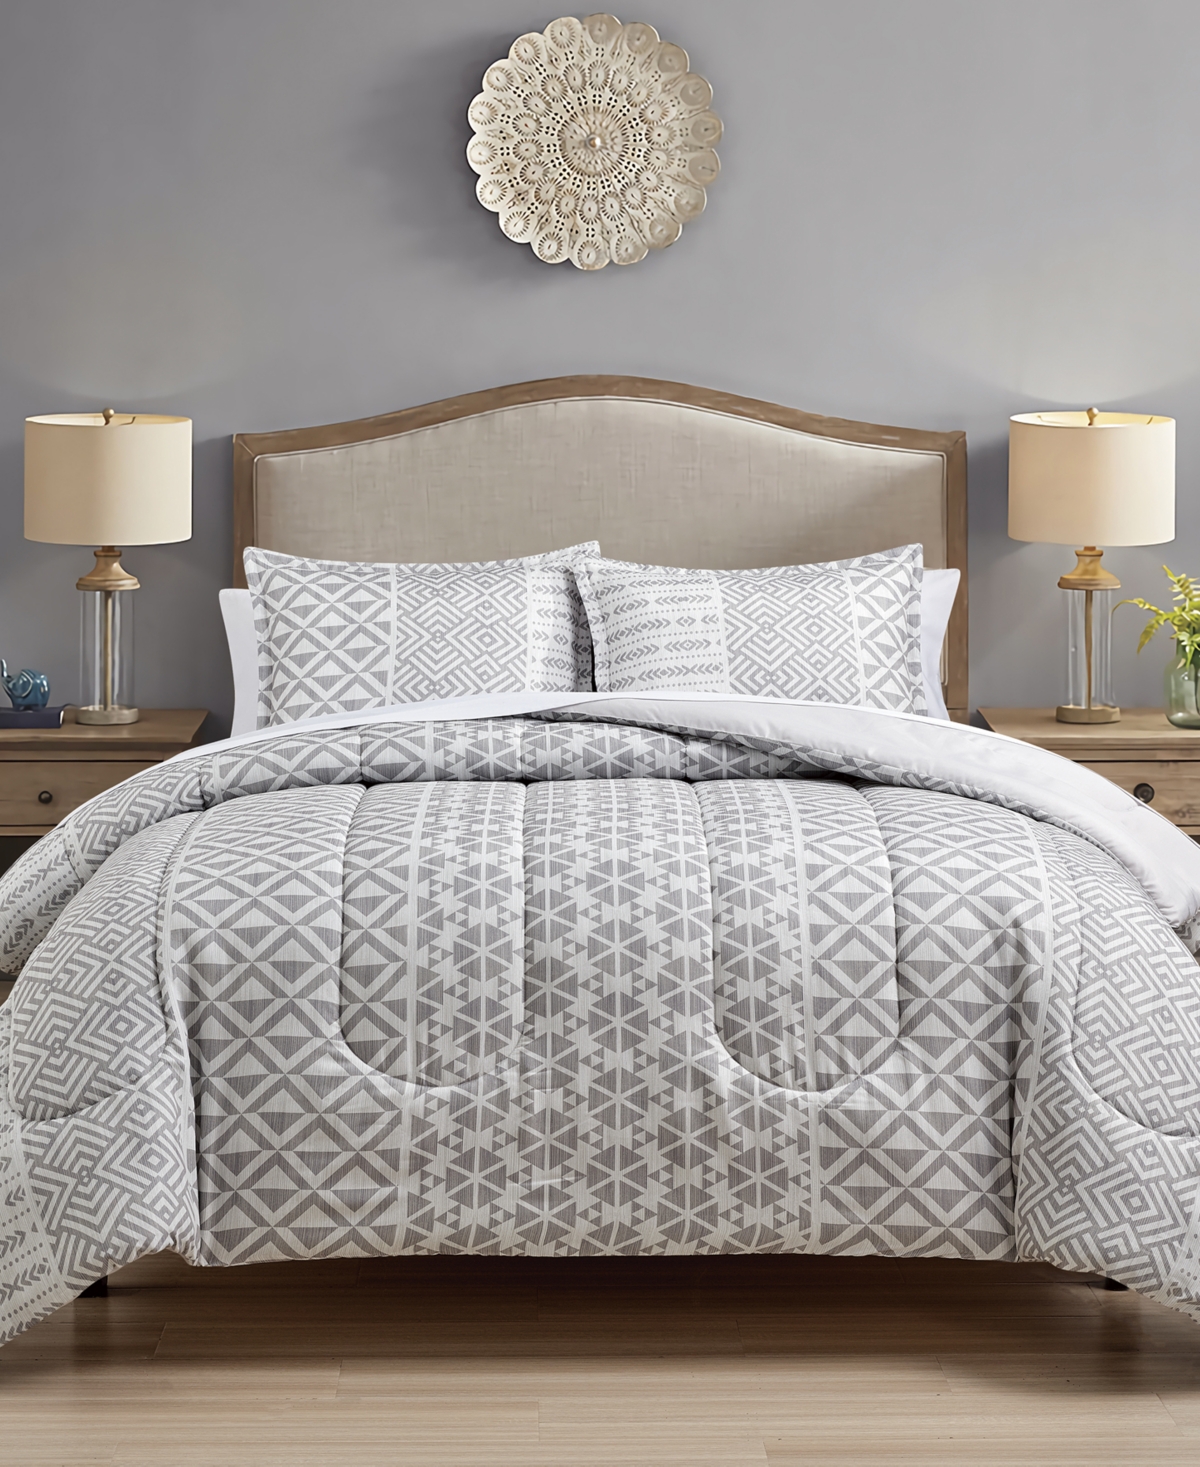 Sunham Willa 3-pc. Comforter Set, Created For Macy's Bedding In Tan ...